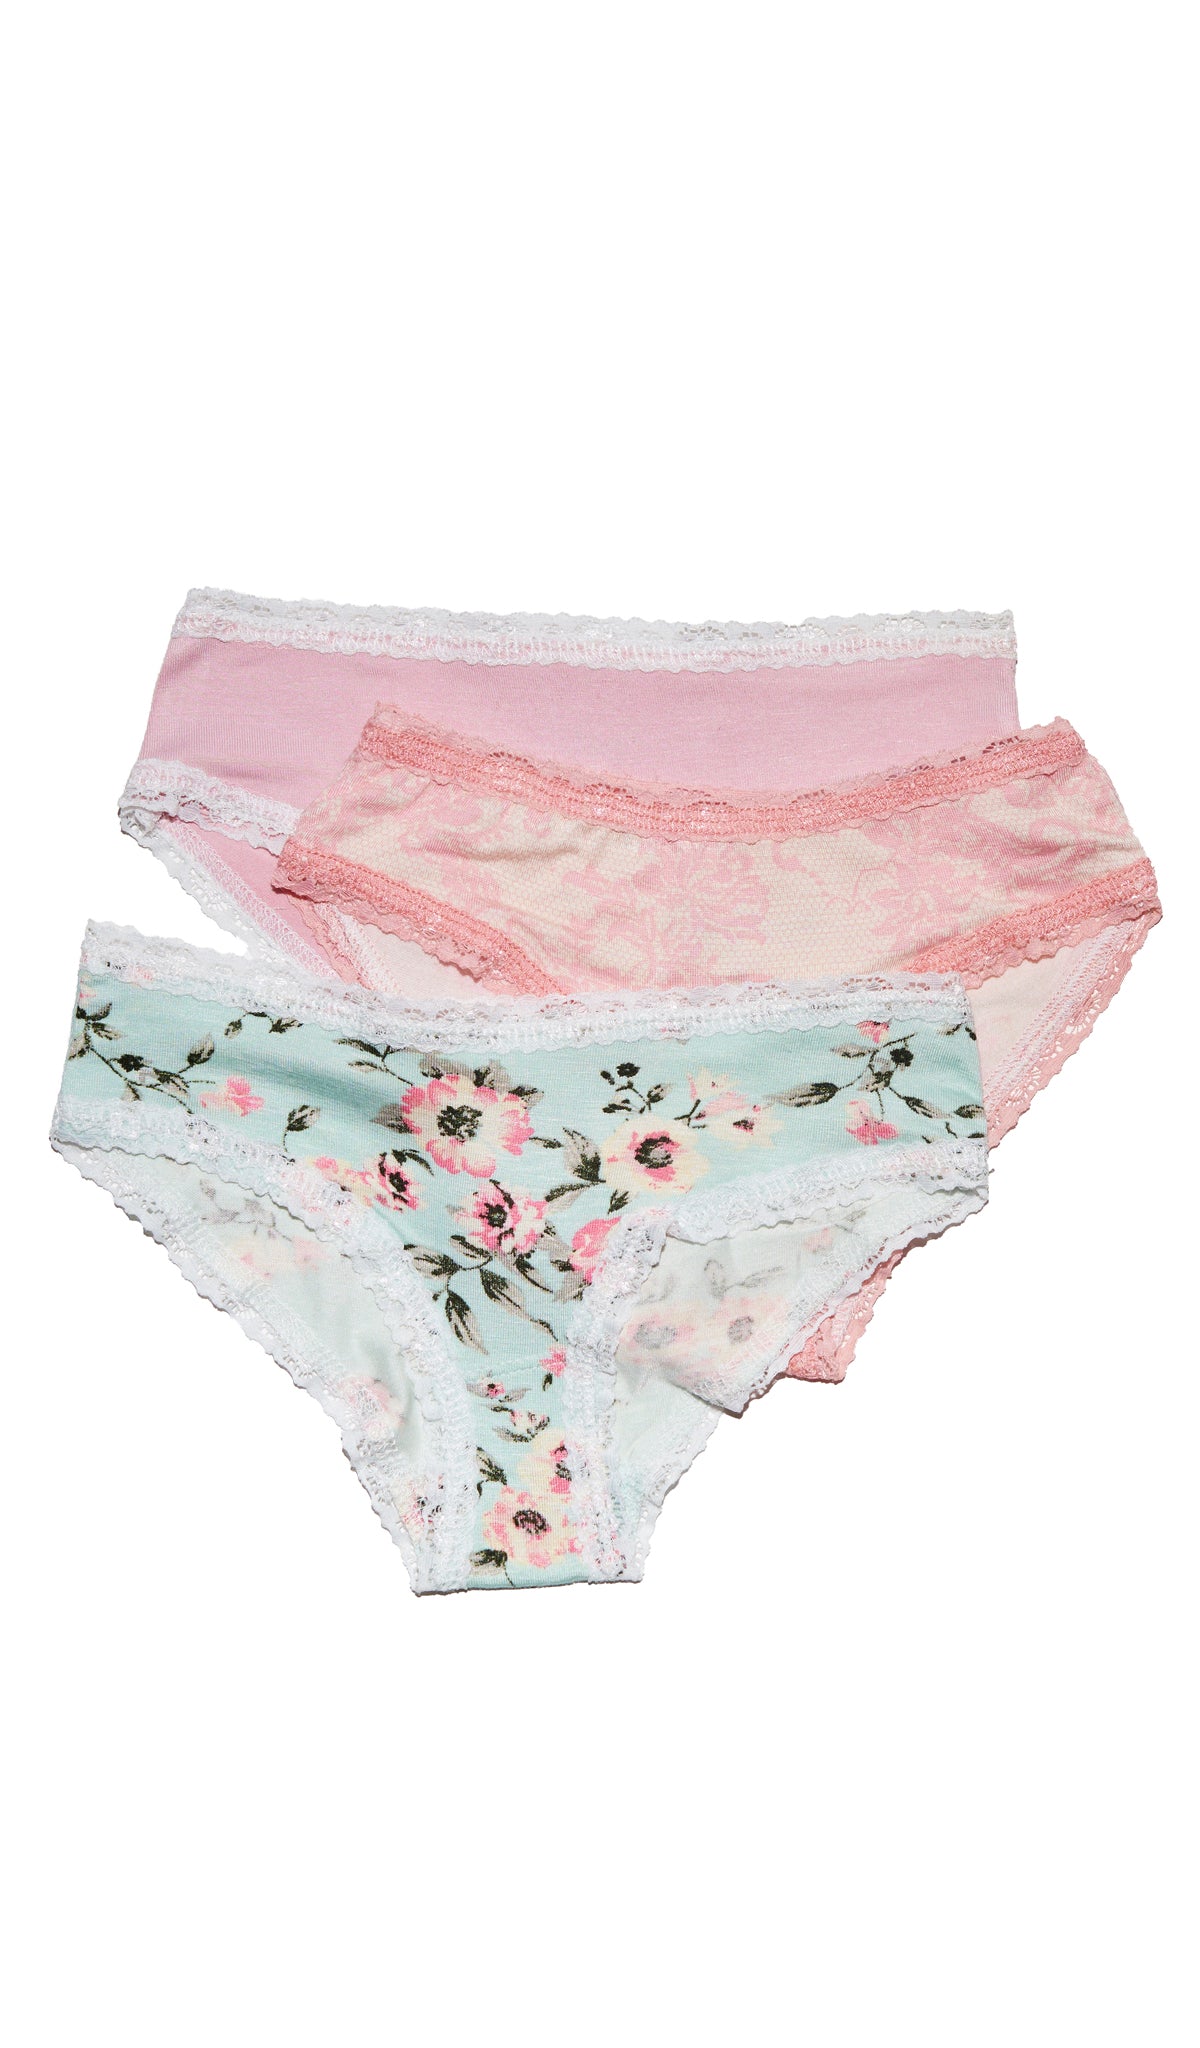 Cloud Blue Kayla Kids 3-Pack Underwear flat shot showing Cloud Blue print, pink chantilly print, and solid blush pink underwear.